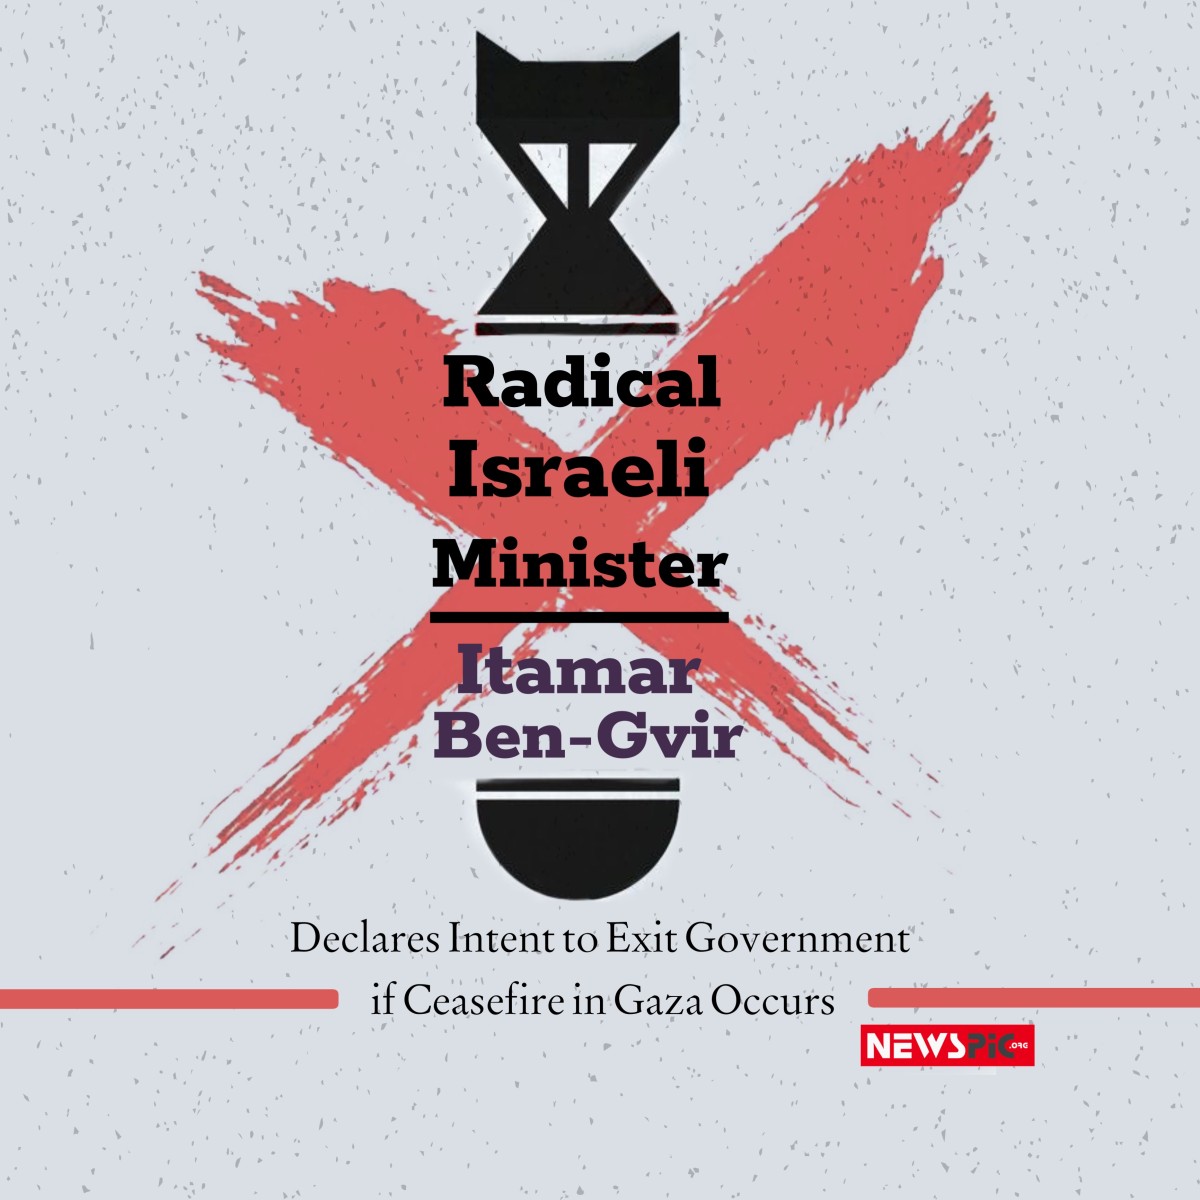 Radical Israeli Minister Itamar Ben-Gvir